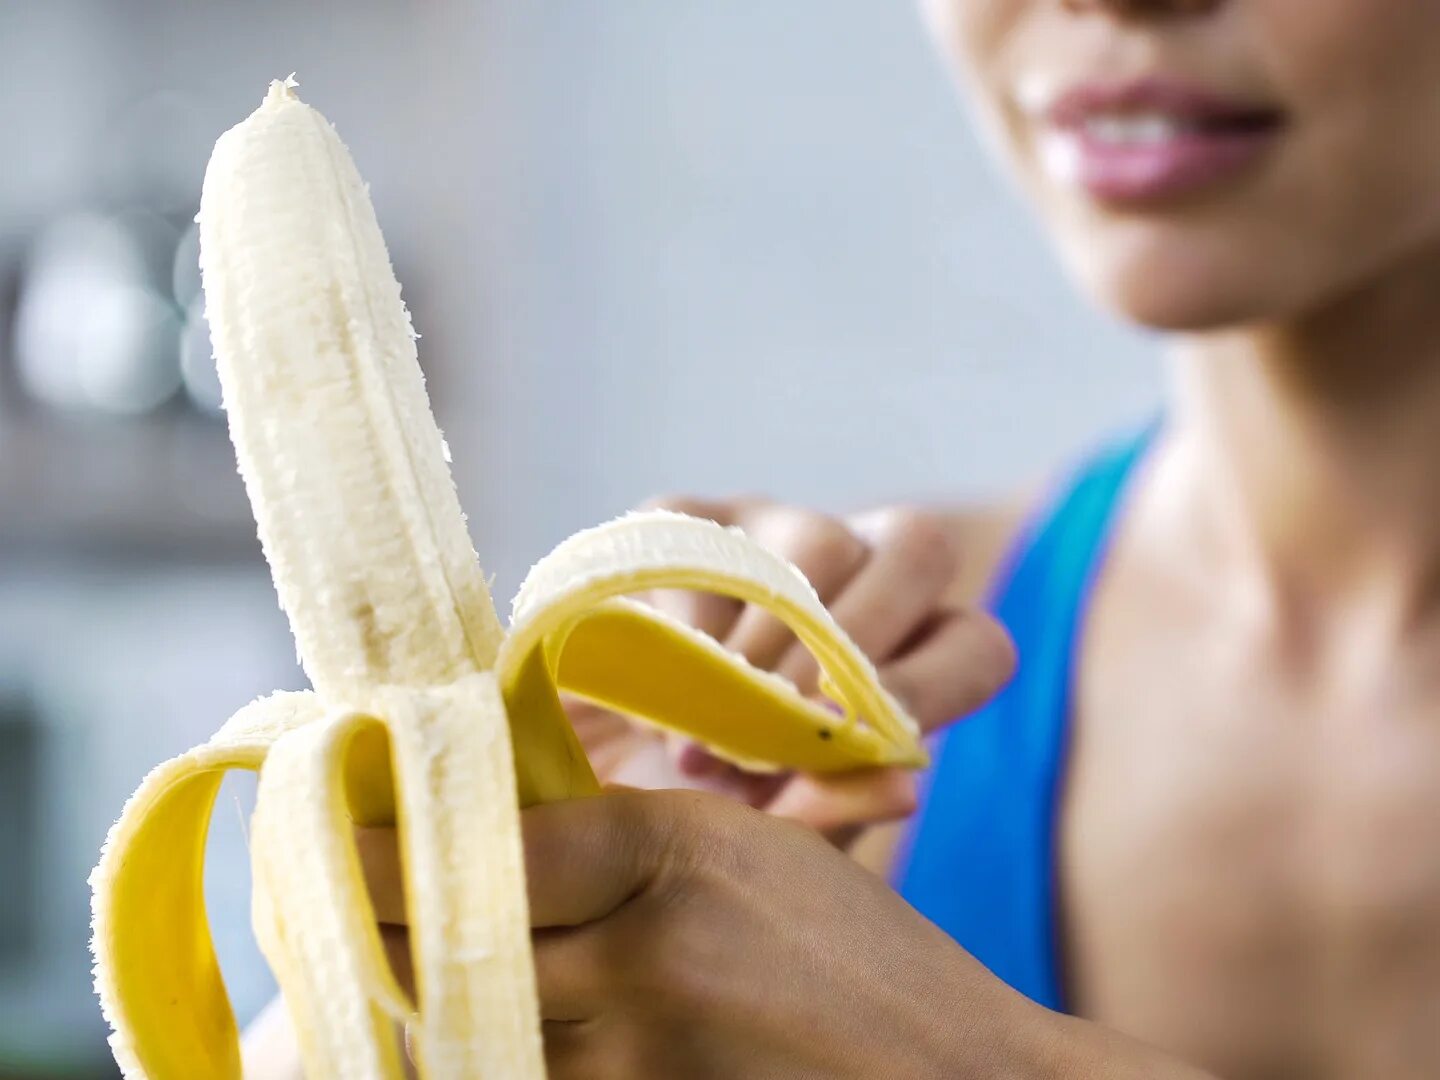 Ел кожуру бананов. Человек ест банан. Банан в руке. Бананы с кожурой ешь. Мороженое в виде банана с кожурой.